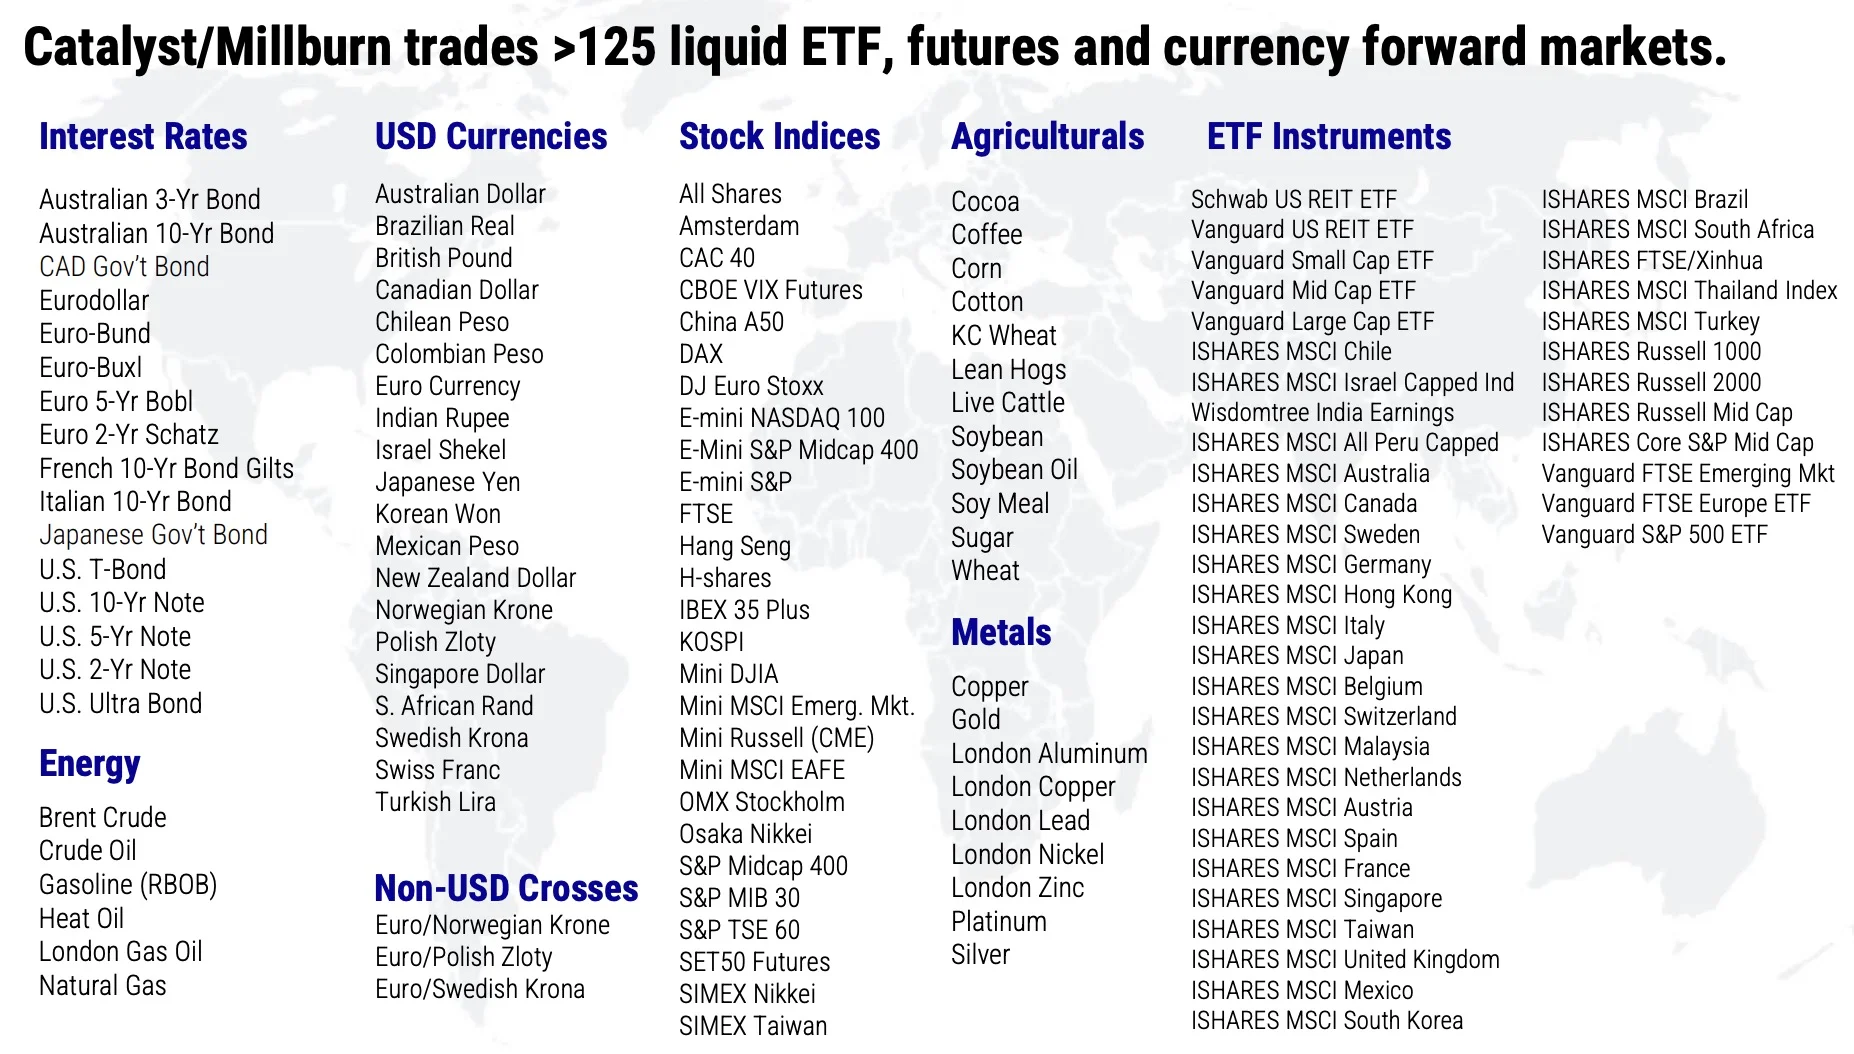 Catalyst/Millburn Trades 125 Liquid ETF, Futures and Currency Forward Markets 